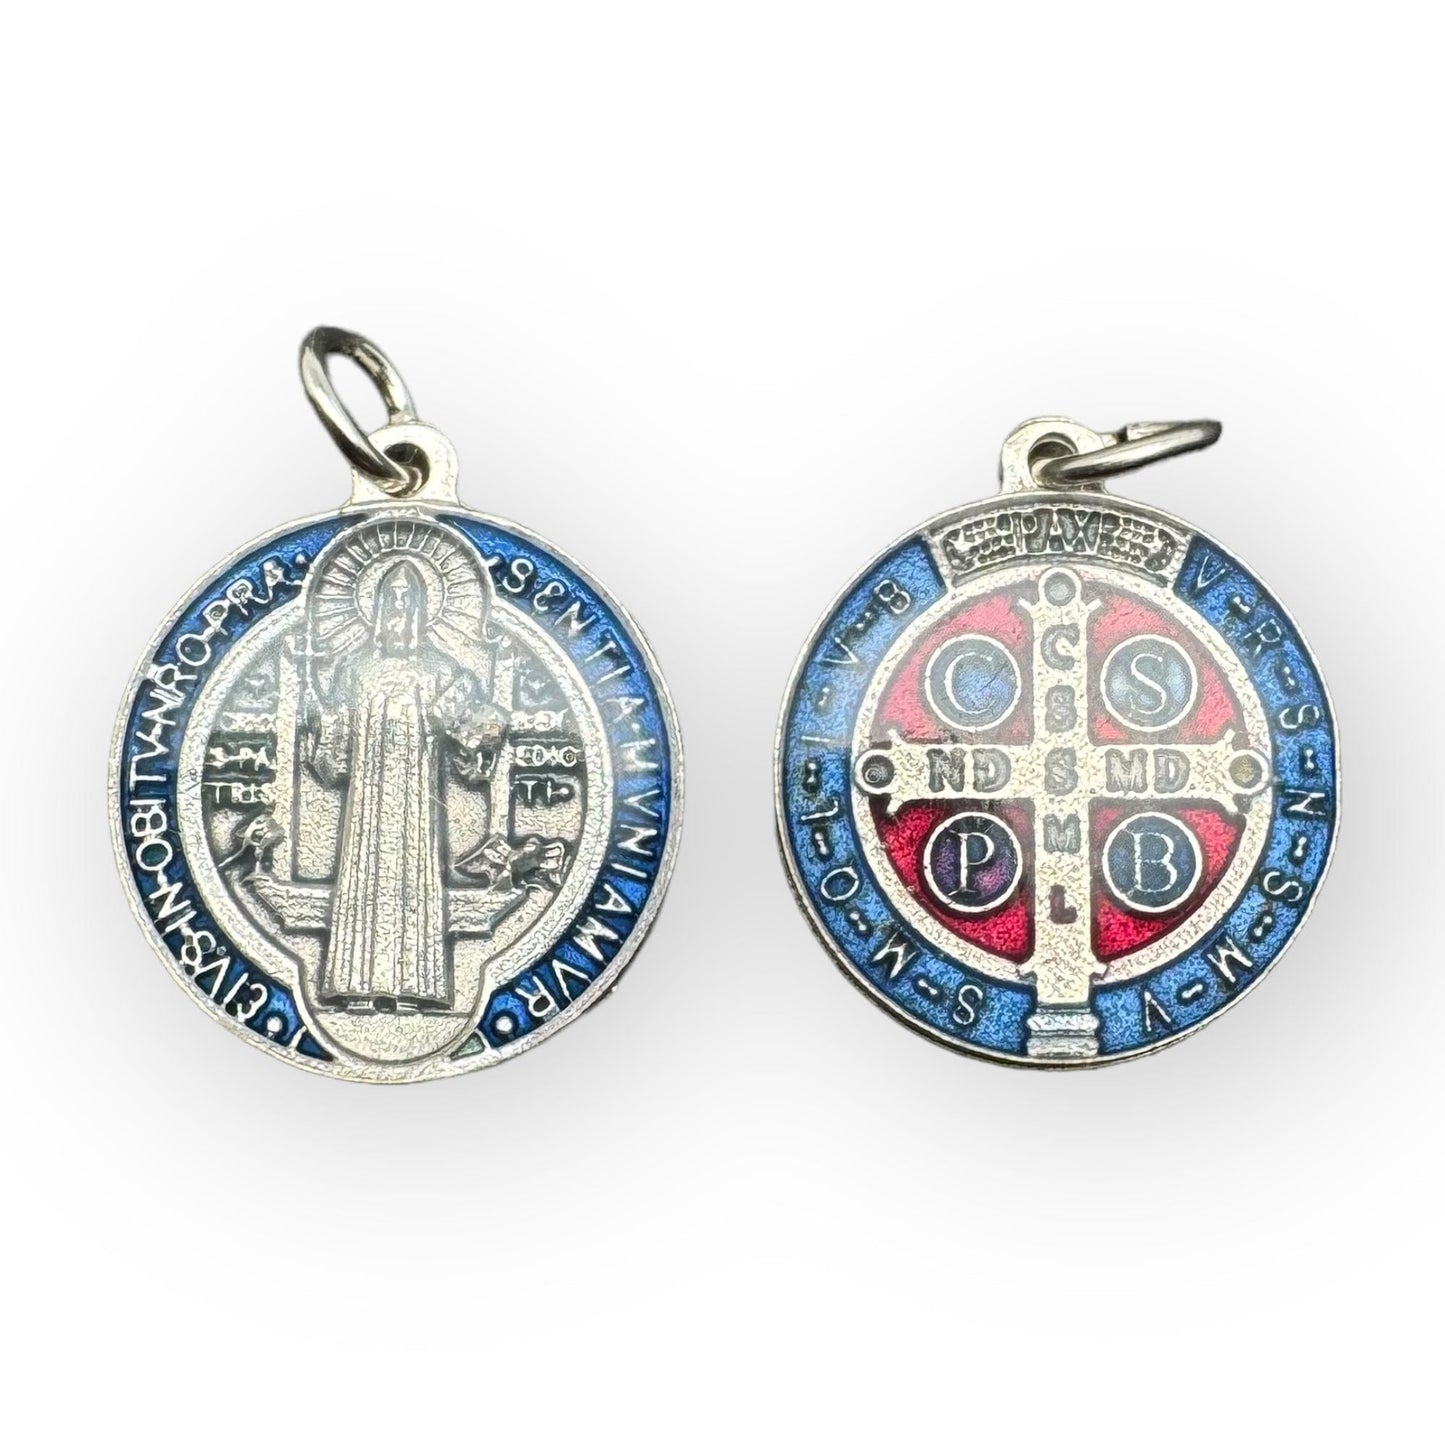 Catholically St Benedict Medal St. Benedict Enamel 3/4" - Medal Catholic Exorcism - Blessed By Pope